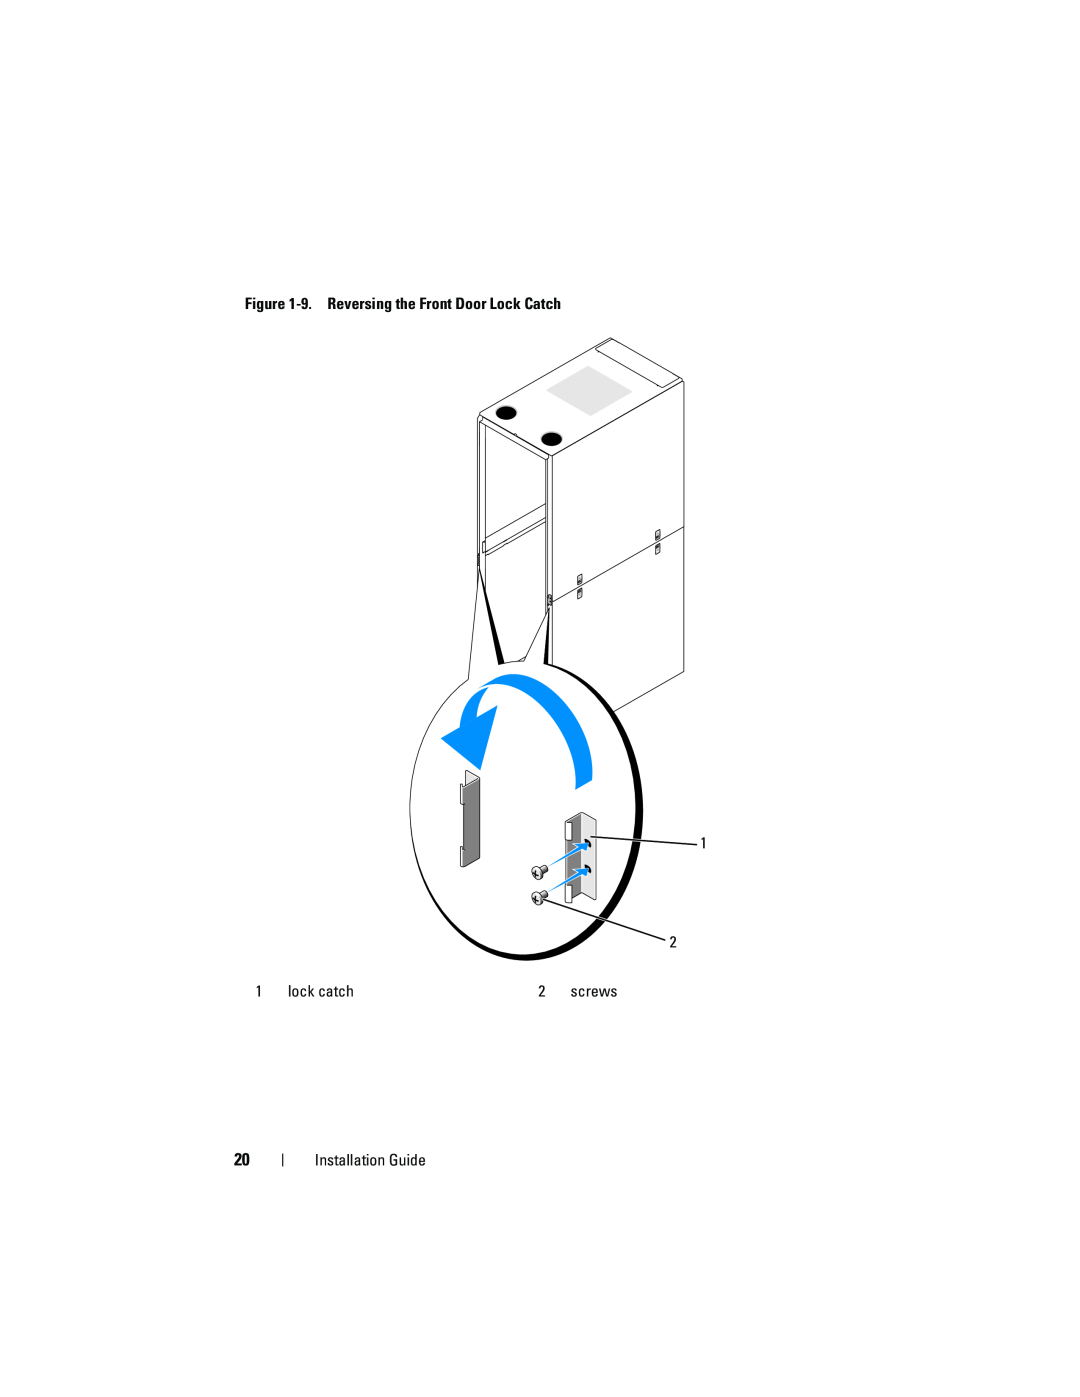 Dell 4220 manual 9. Reversing the Front Door Lock Catch, lock catch, Installation Guide, screws 